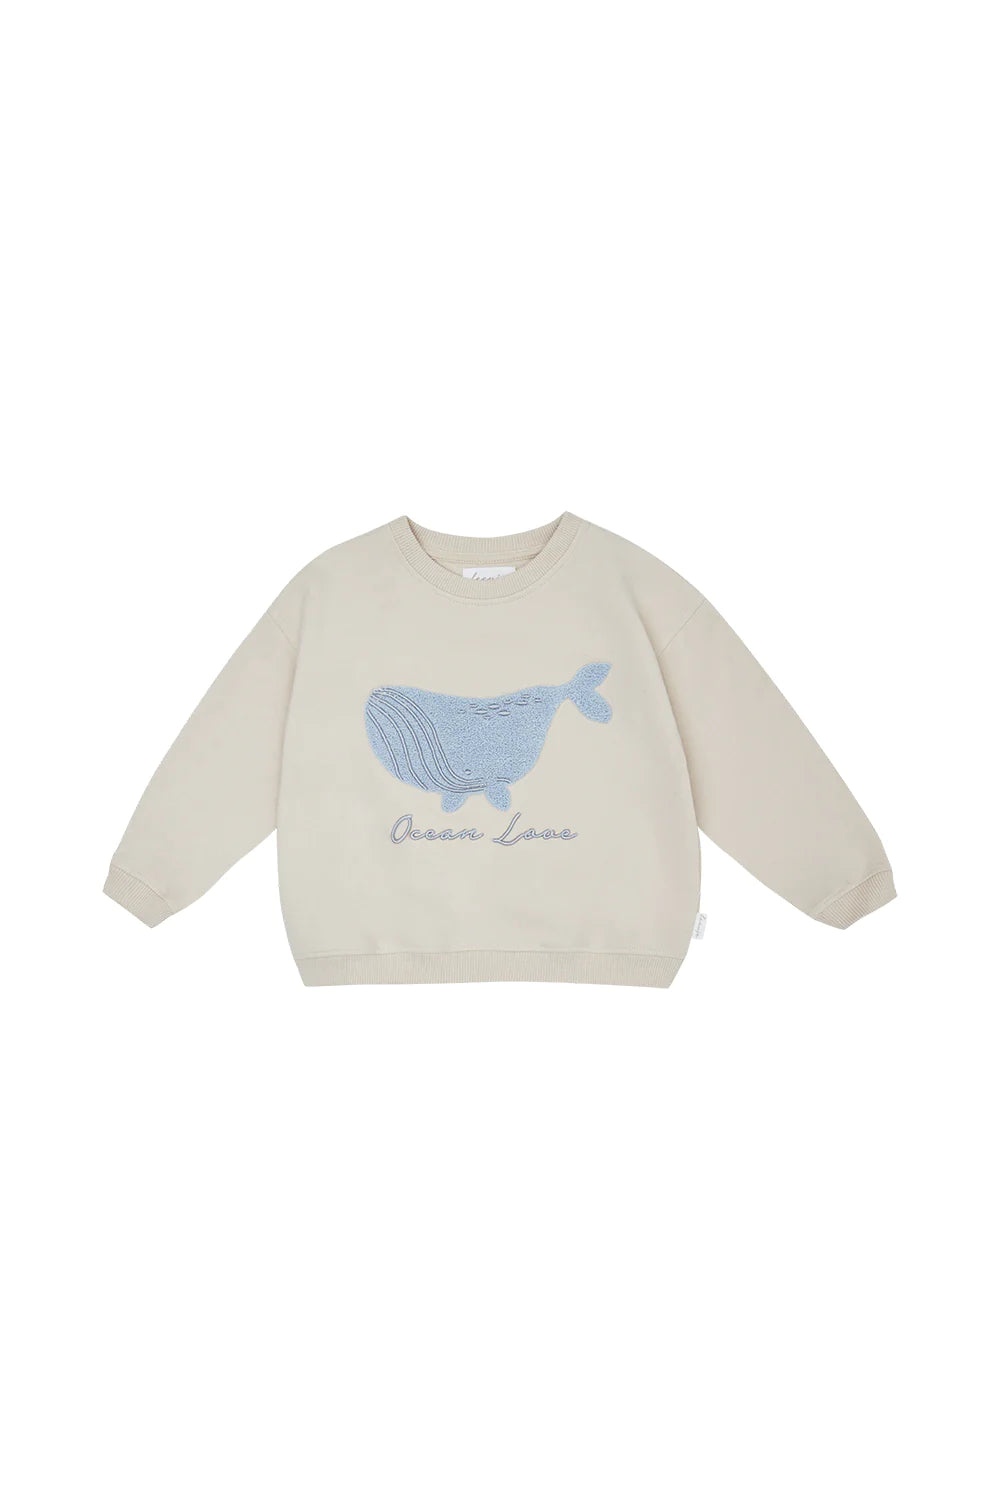 Leevje - Unisex Oversized Sweatshirt Ocean Love für Babies